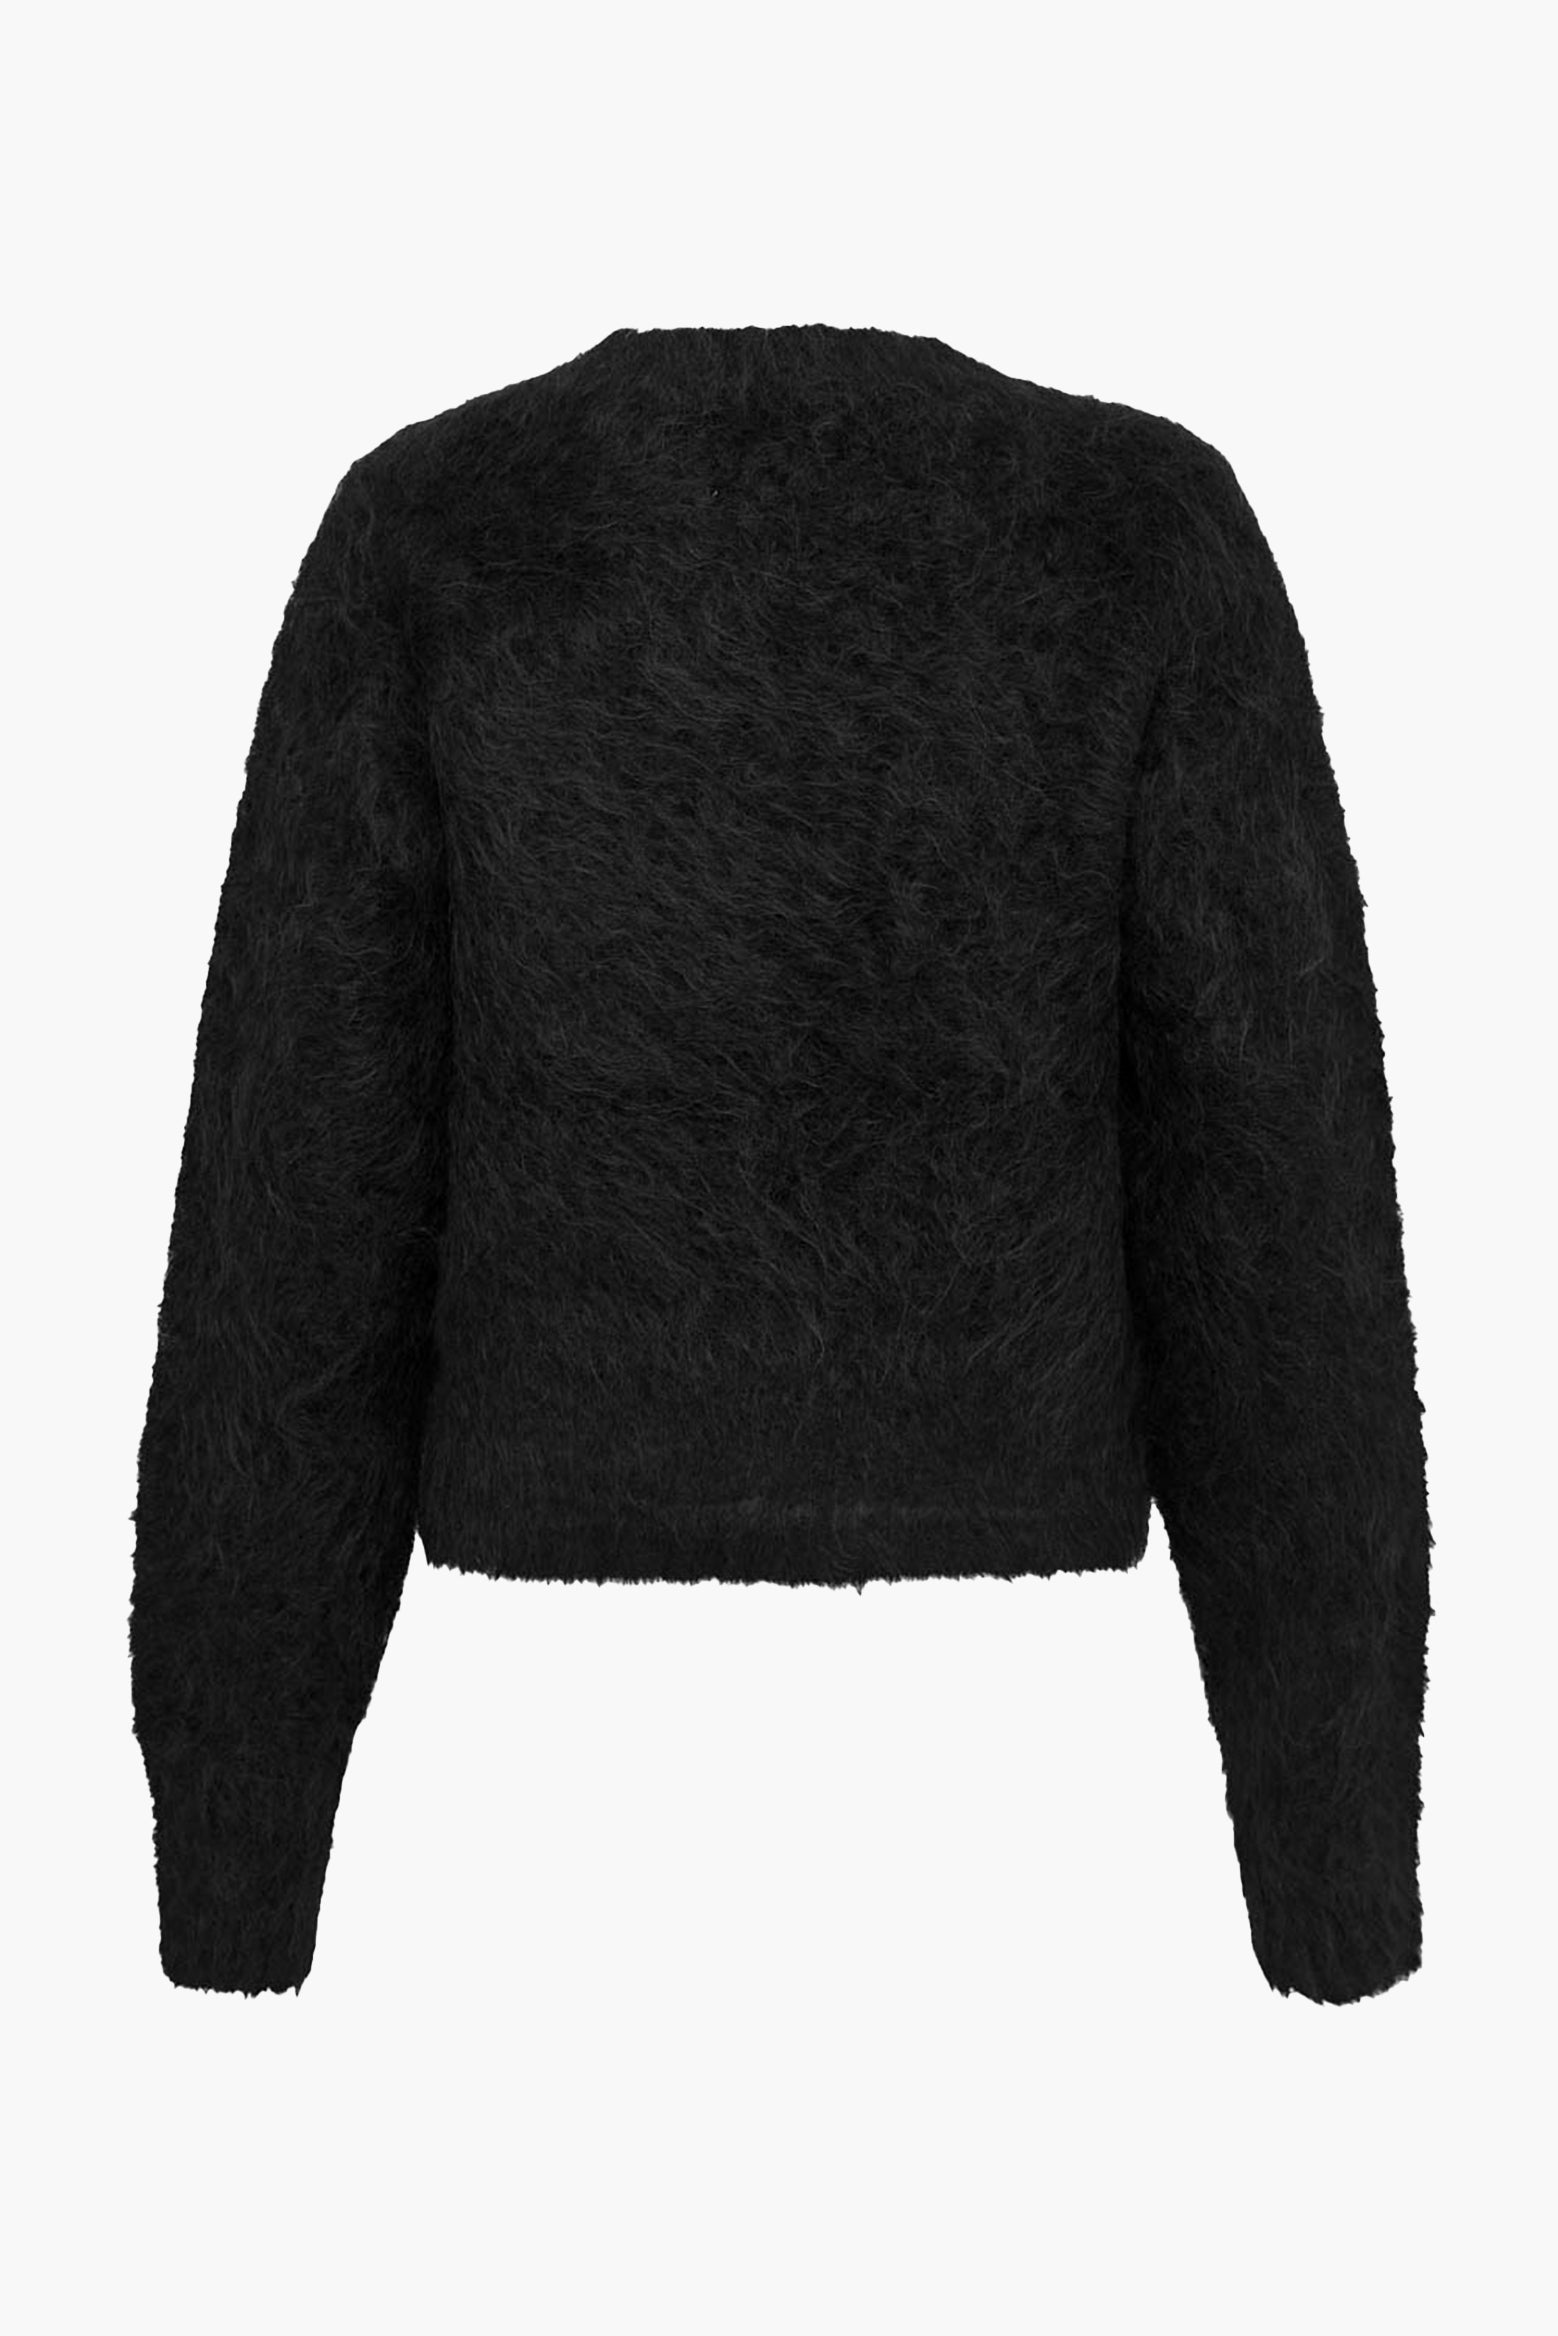 ST. AGNI Alpaca Sweater in Black | The New Trend Australia